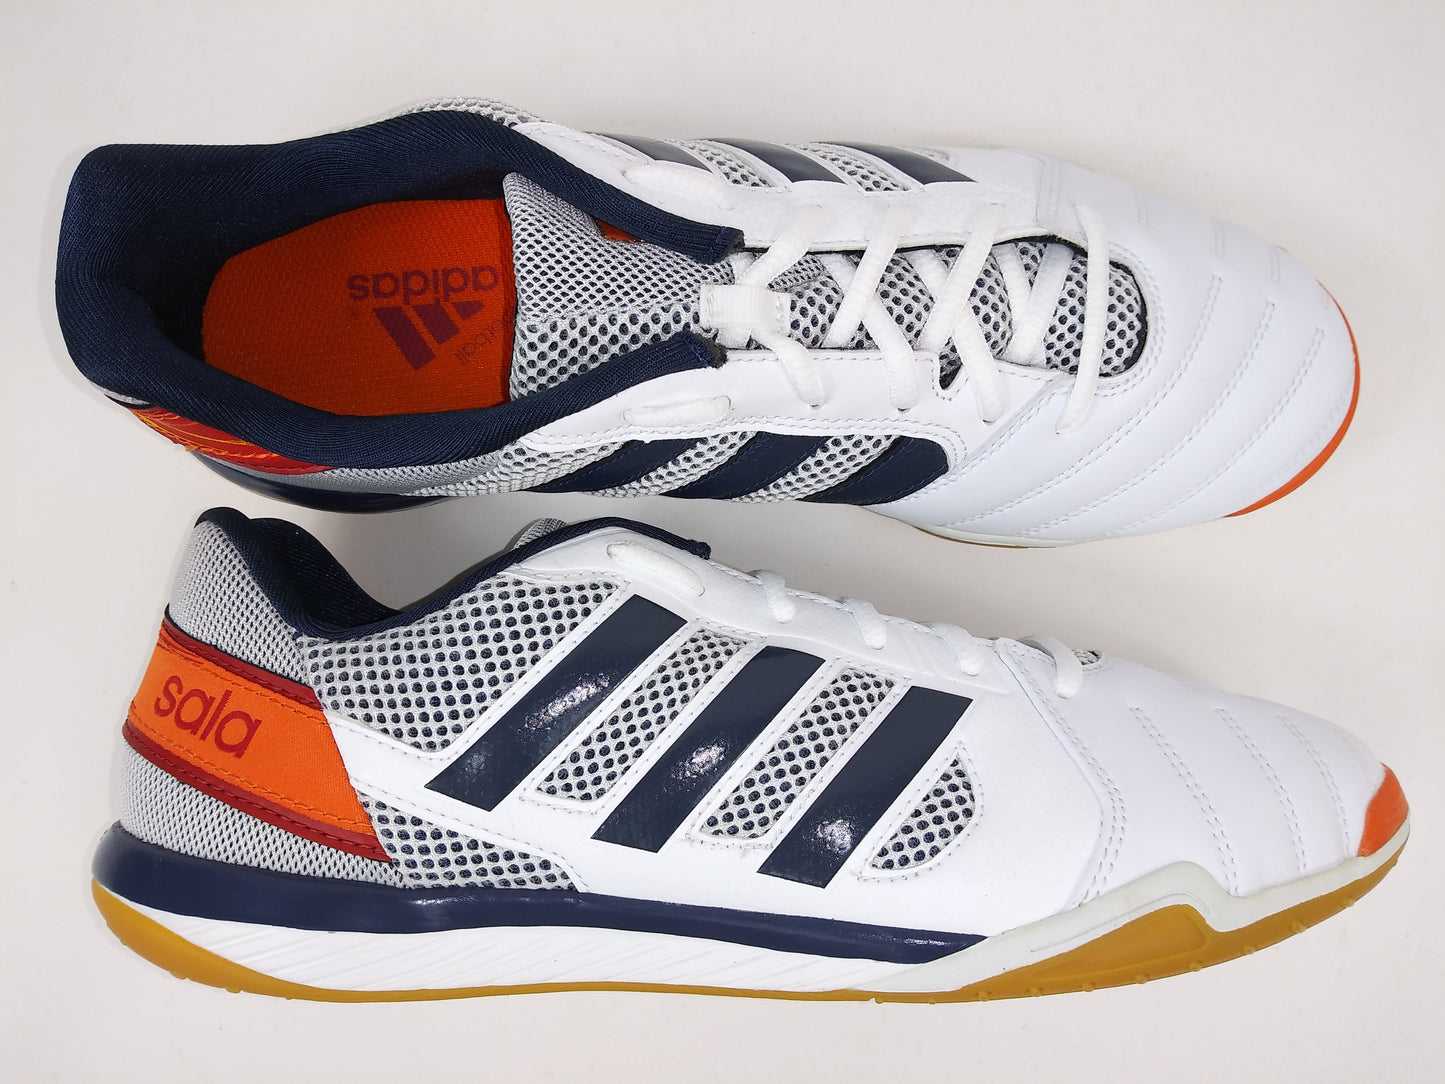 Adidas freefootball TopSala Indoor Shoes White Navy